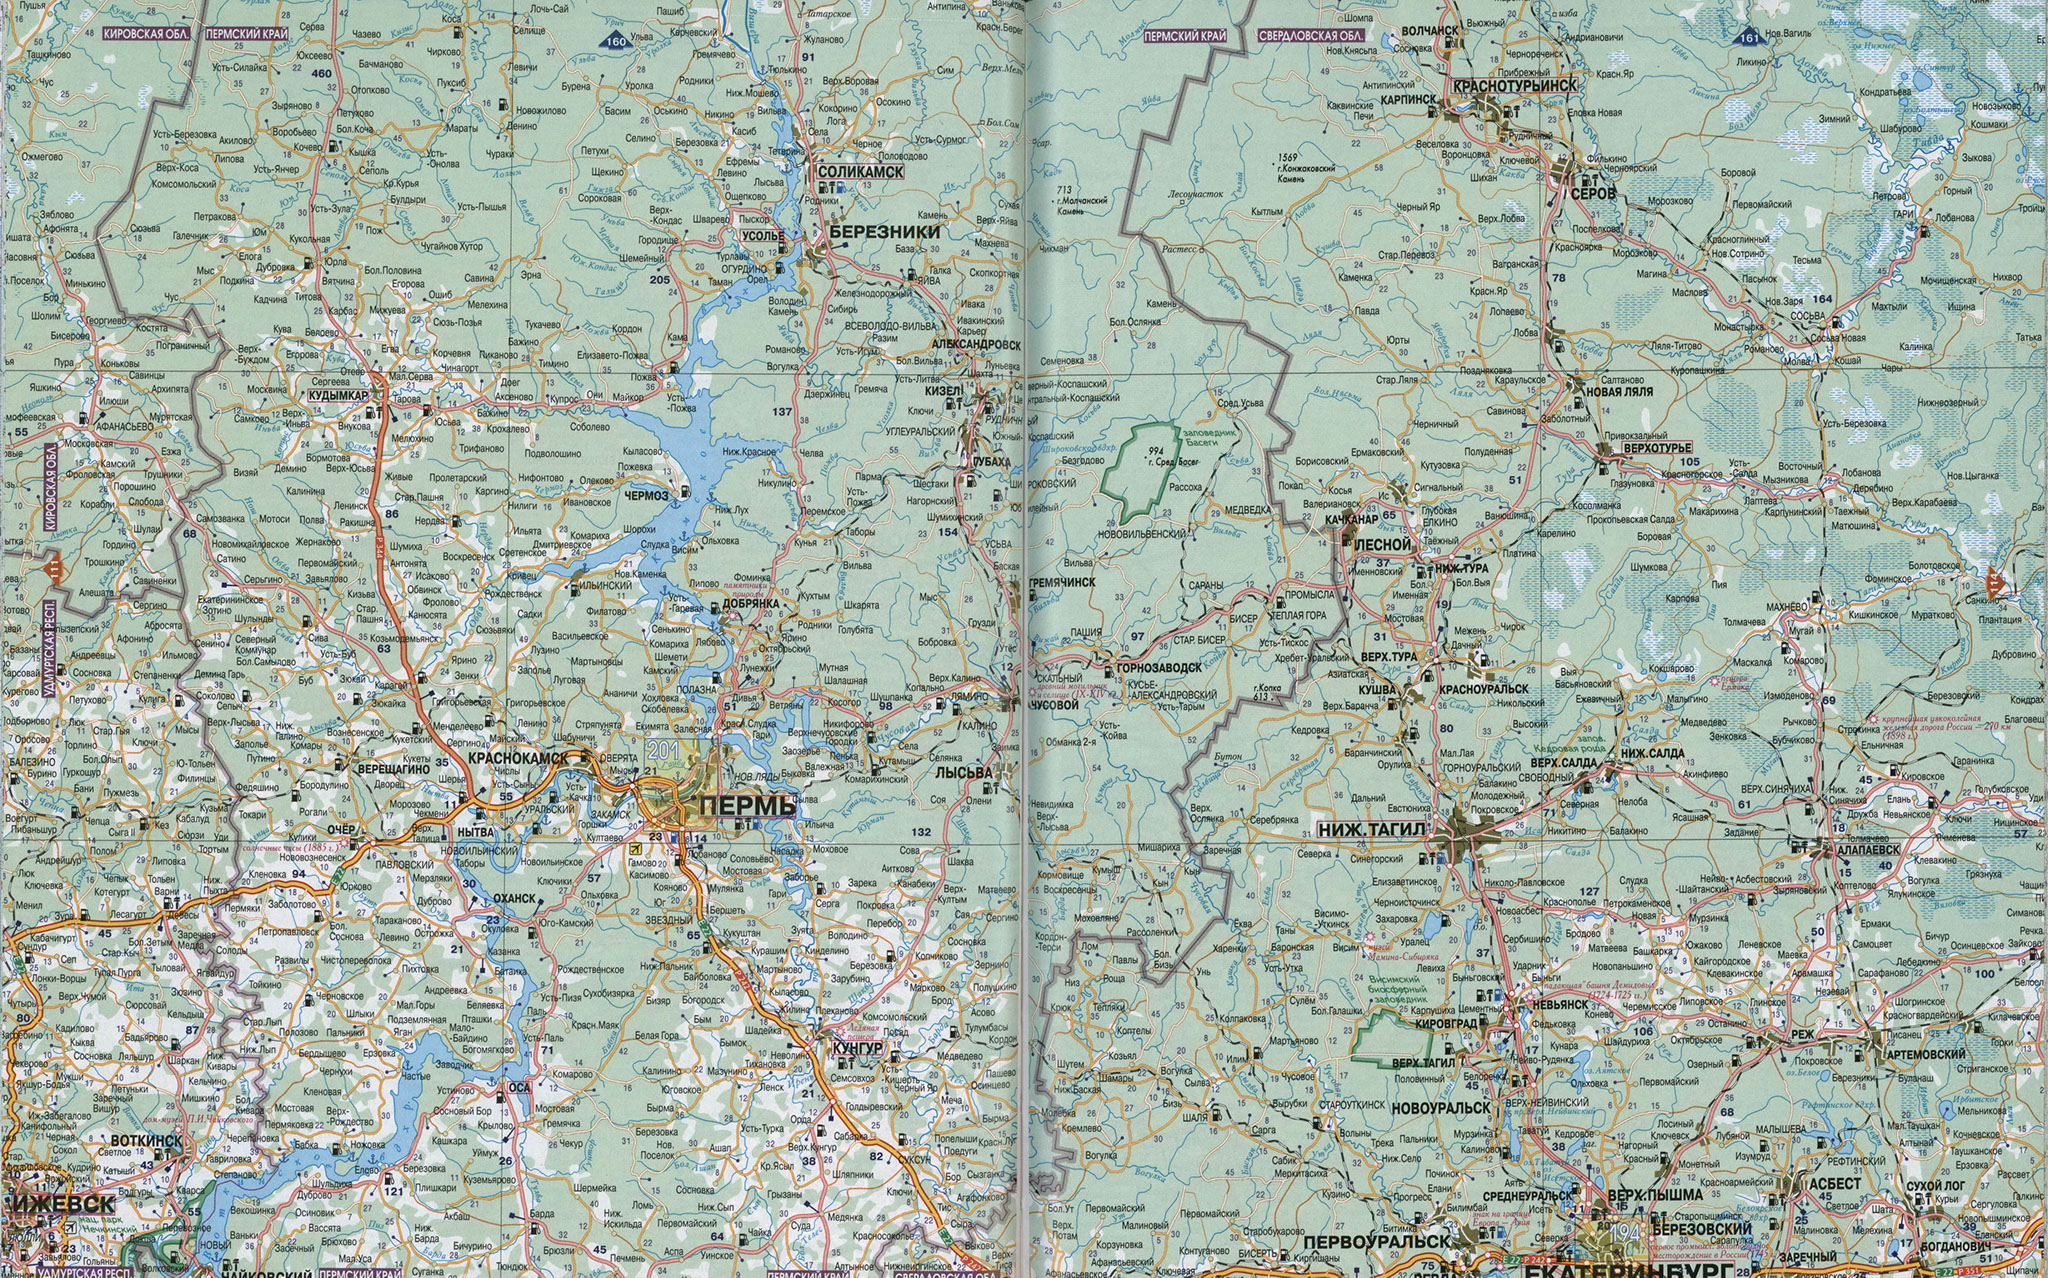 Карта Пермского края